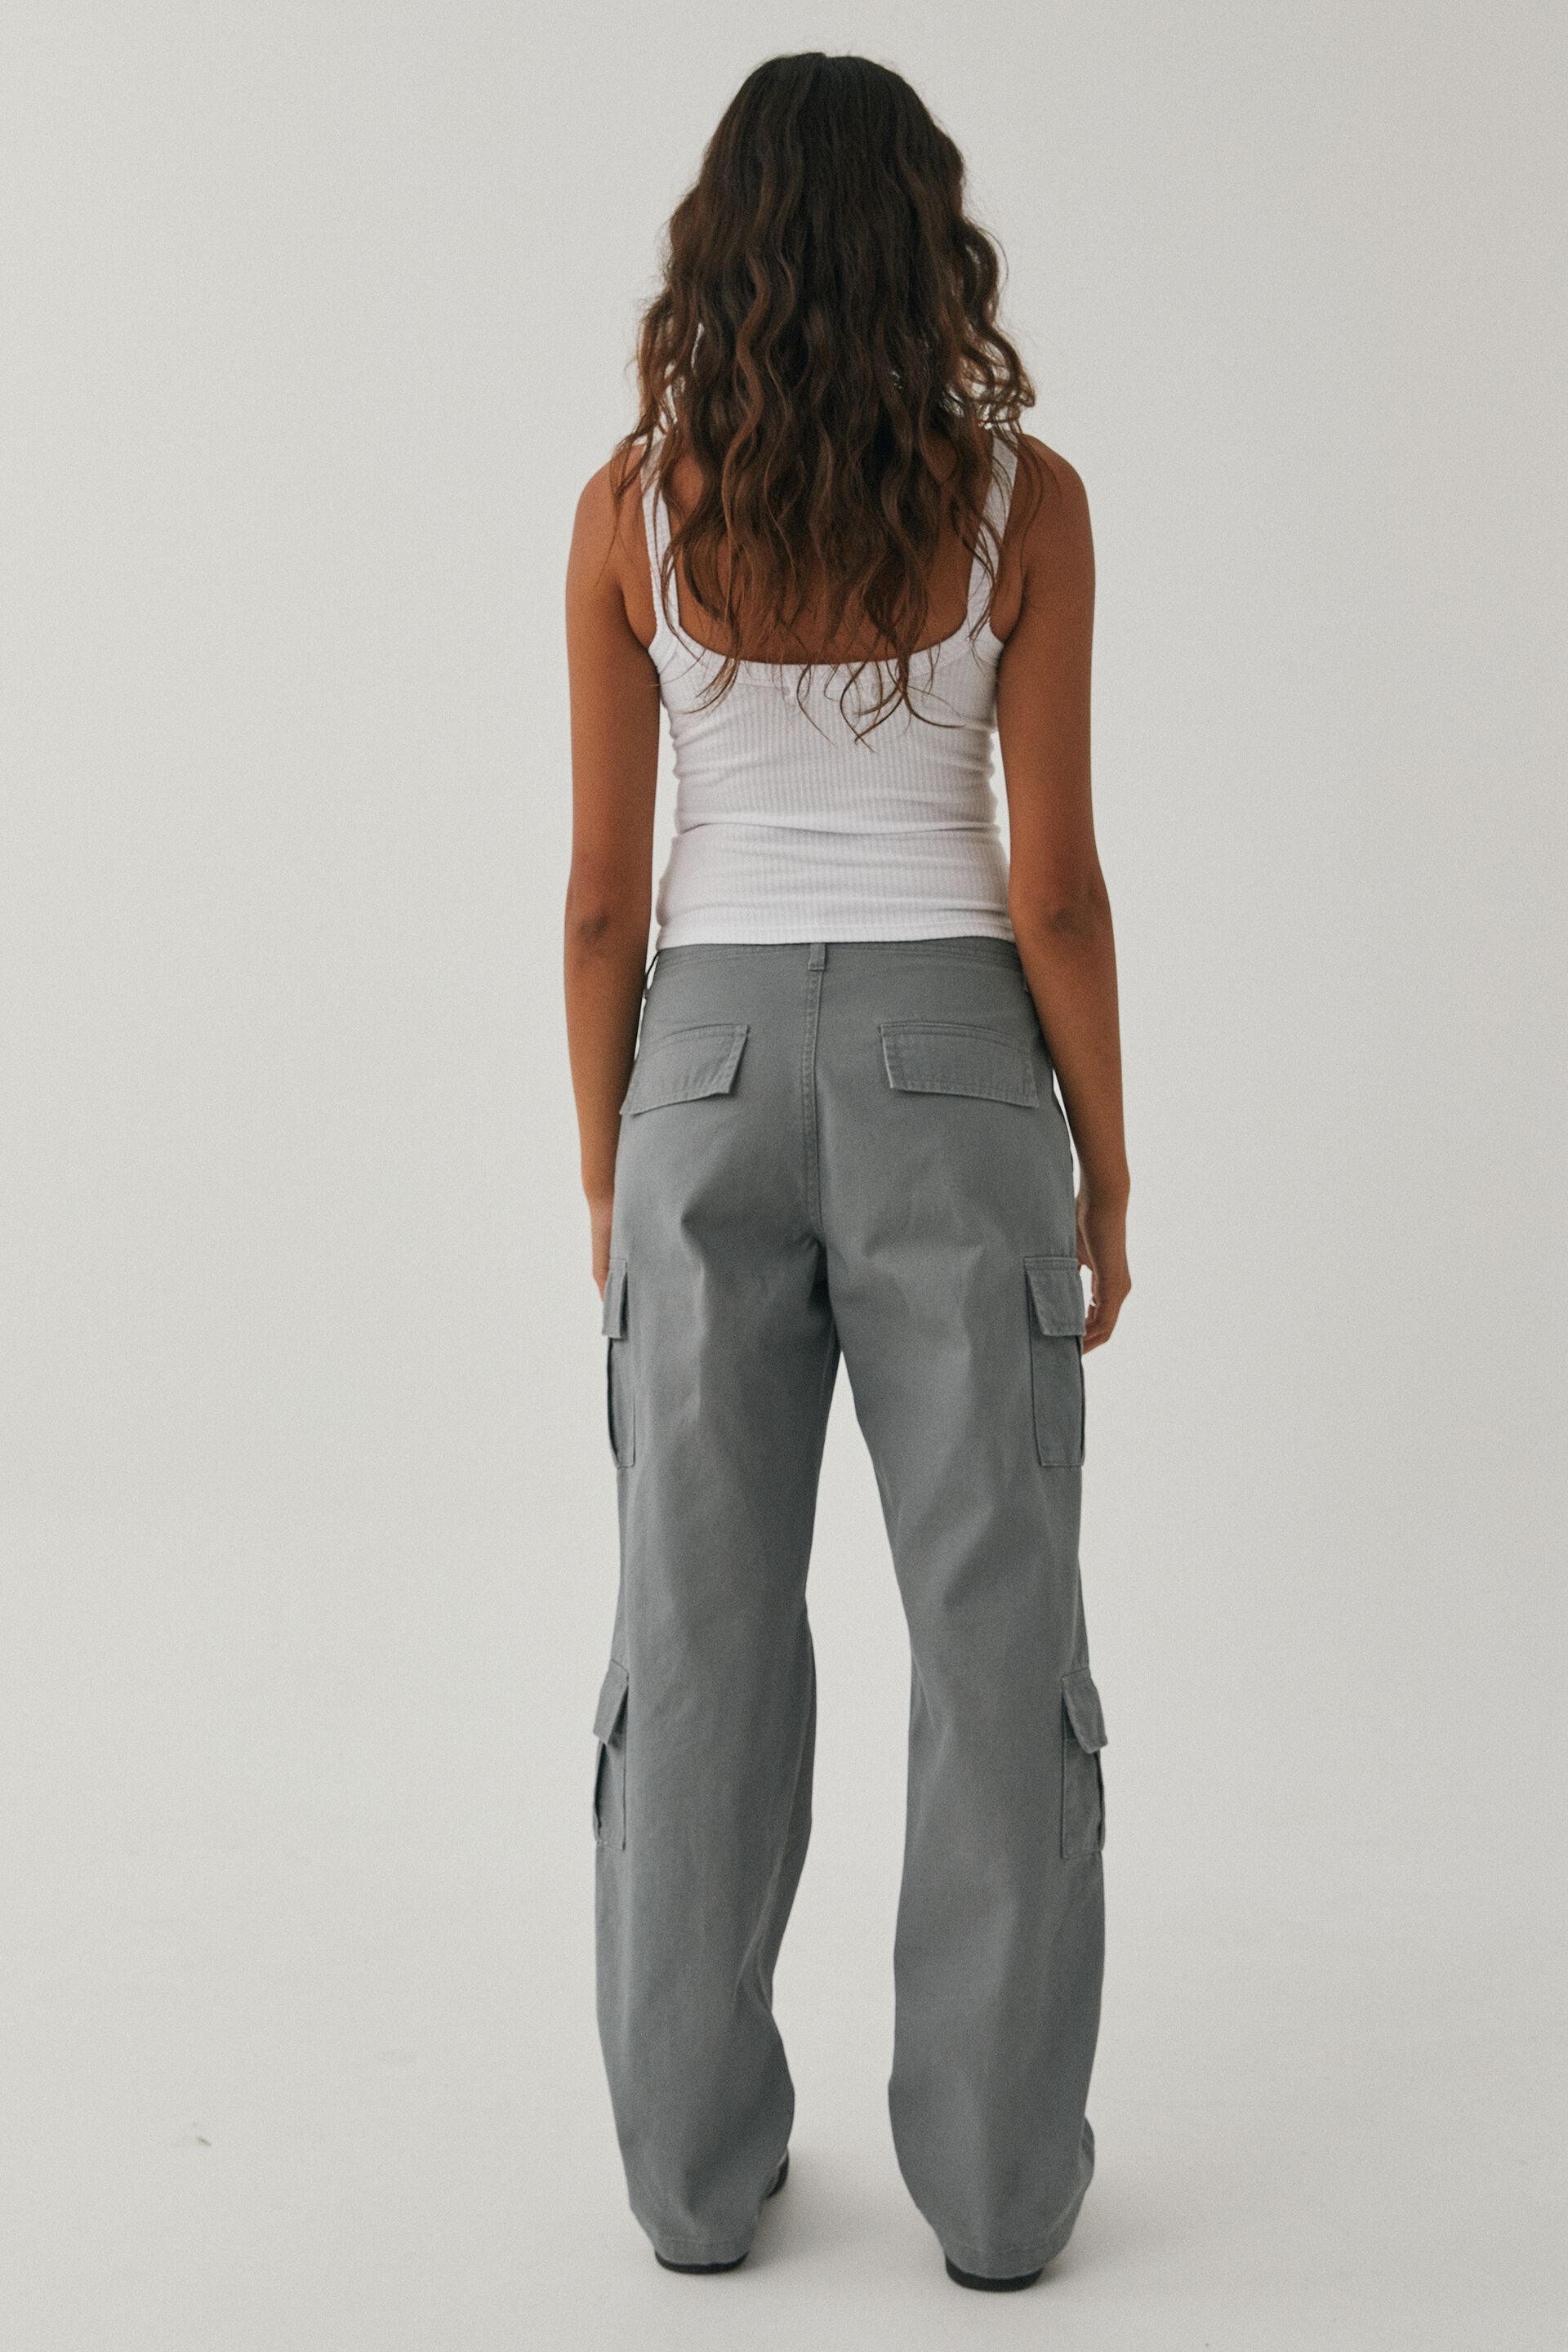 Ladies Cargo Pants Australia  Shop Online  MYER